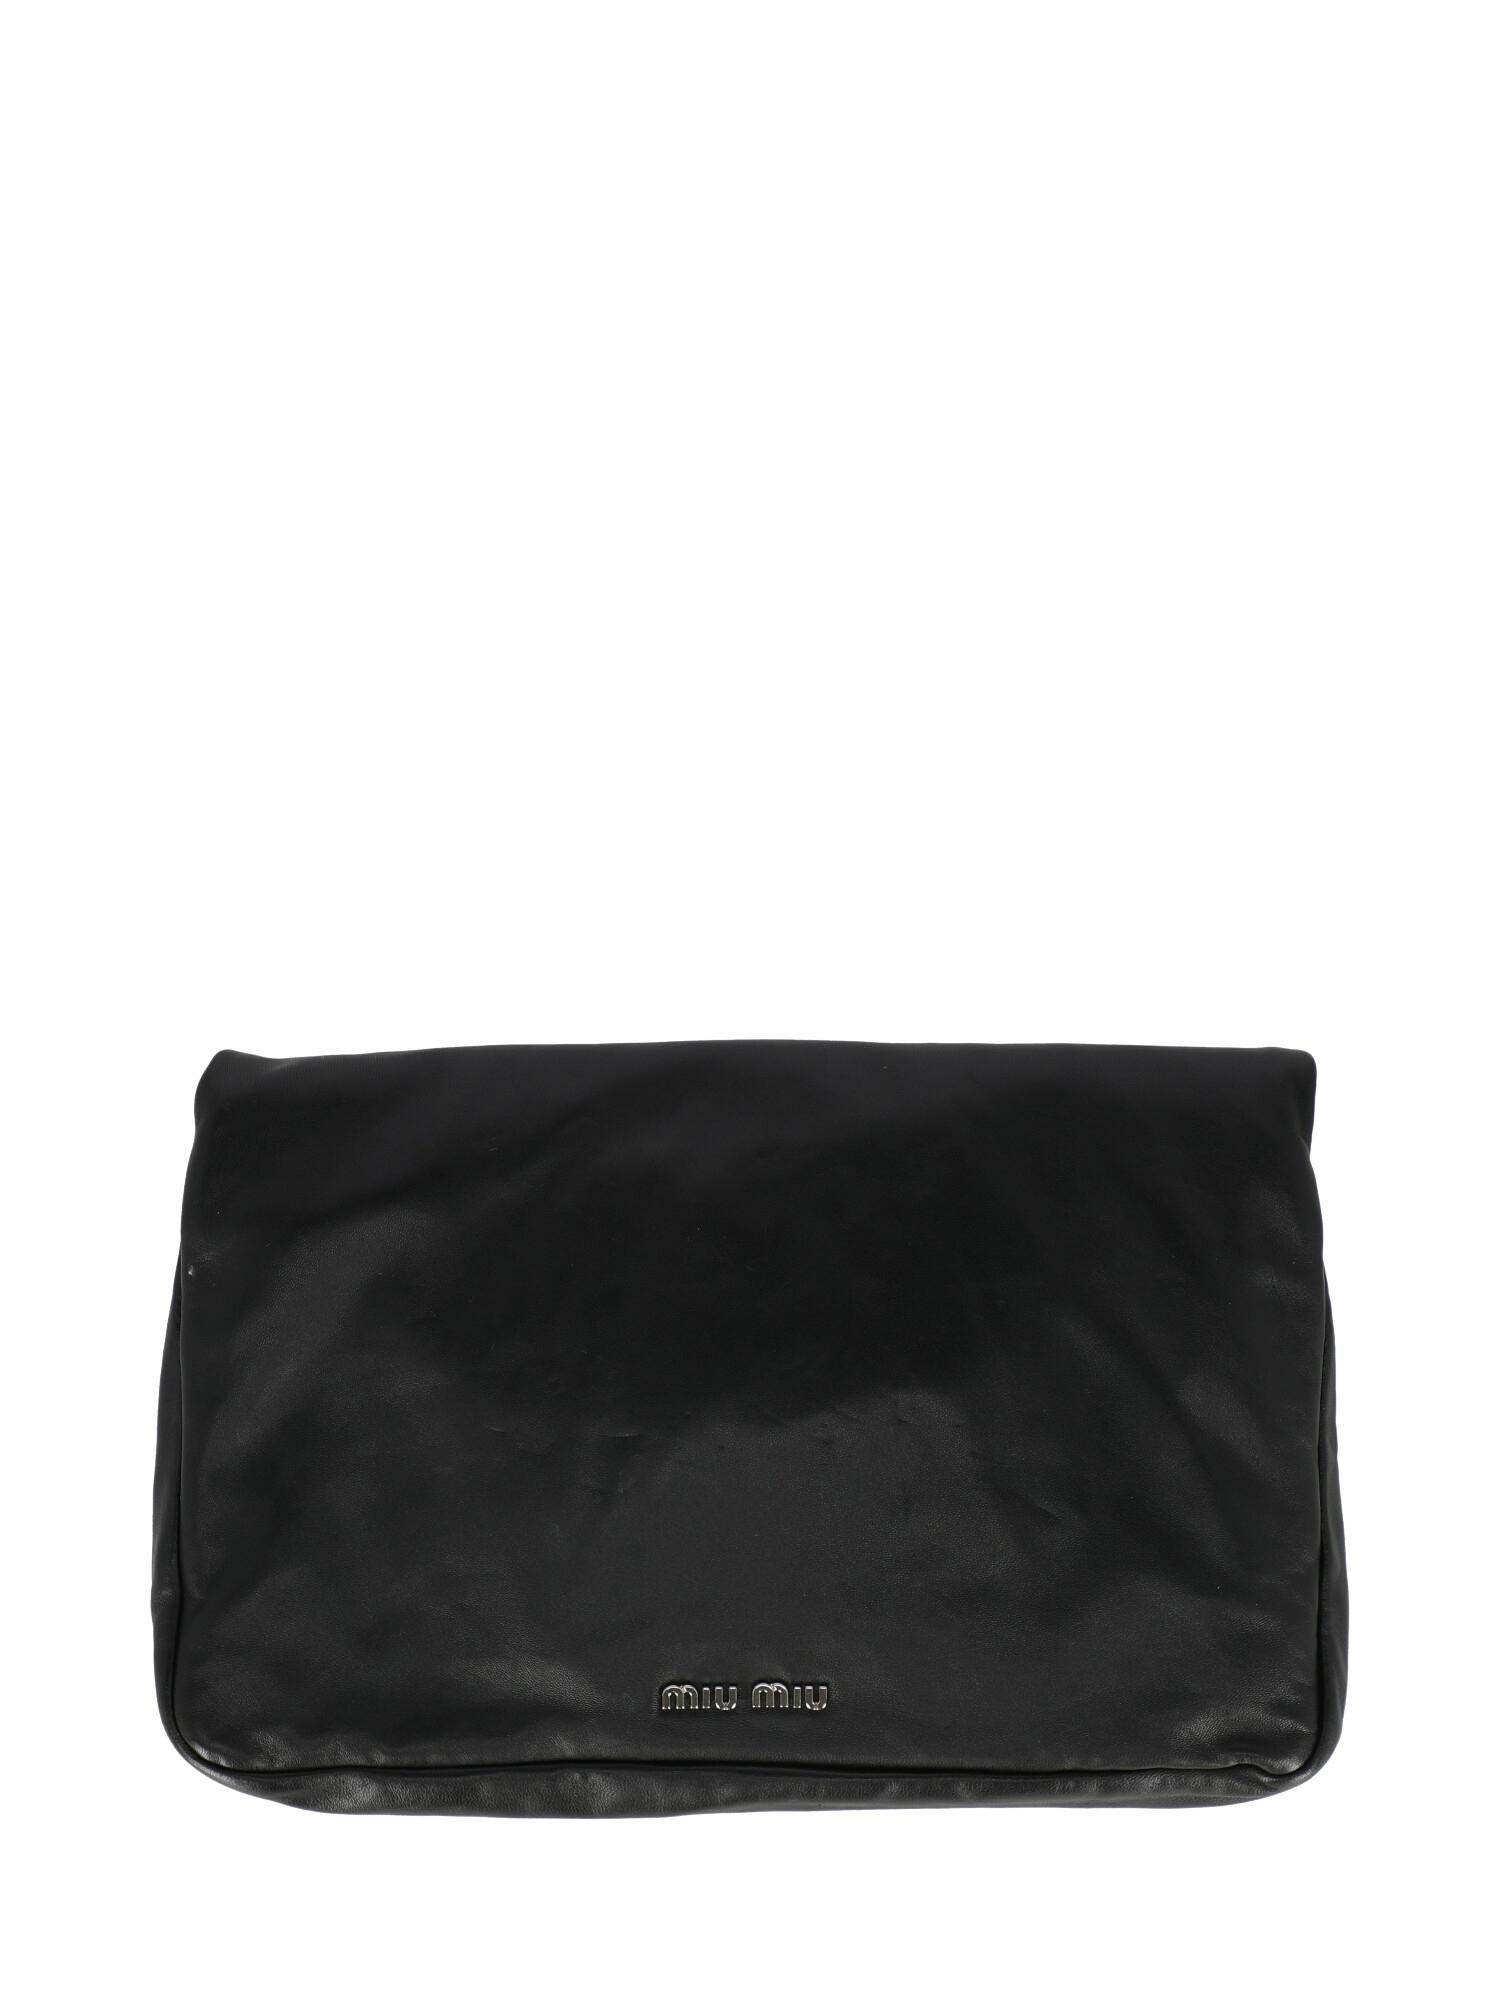 Miu Miu Woman Handbag  Black Leather In Fair Condition For Sale In Milan, IT